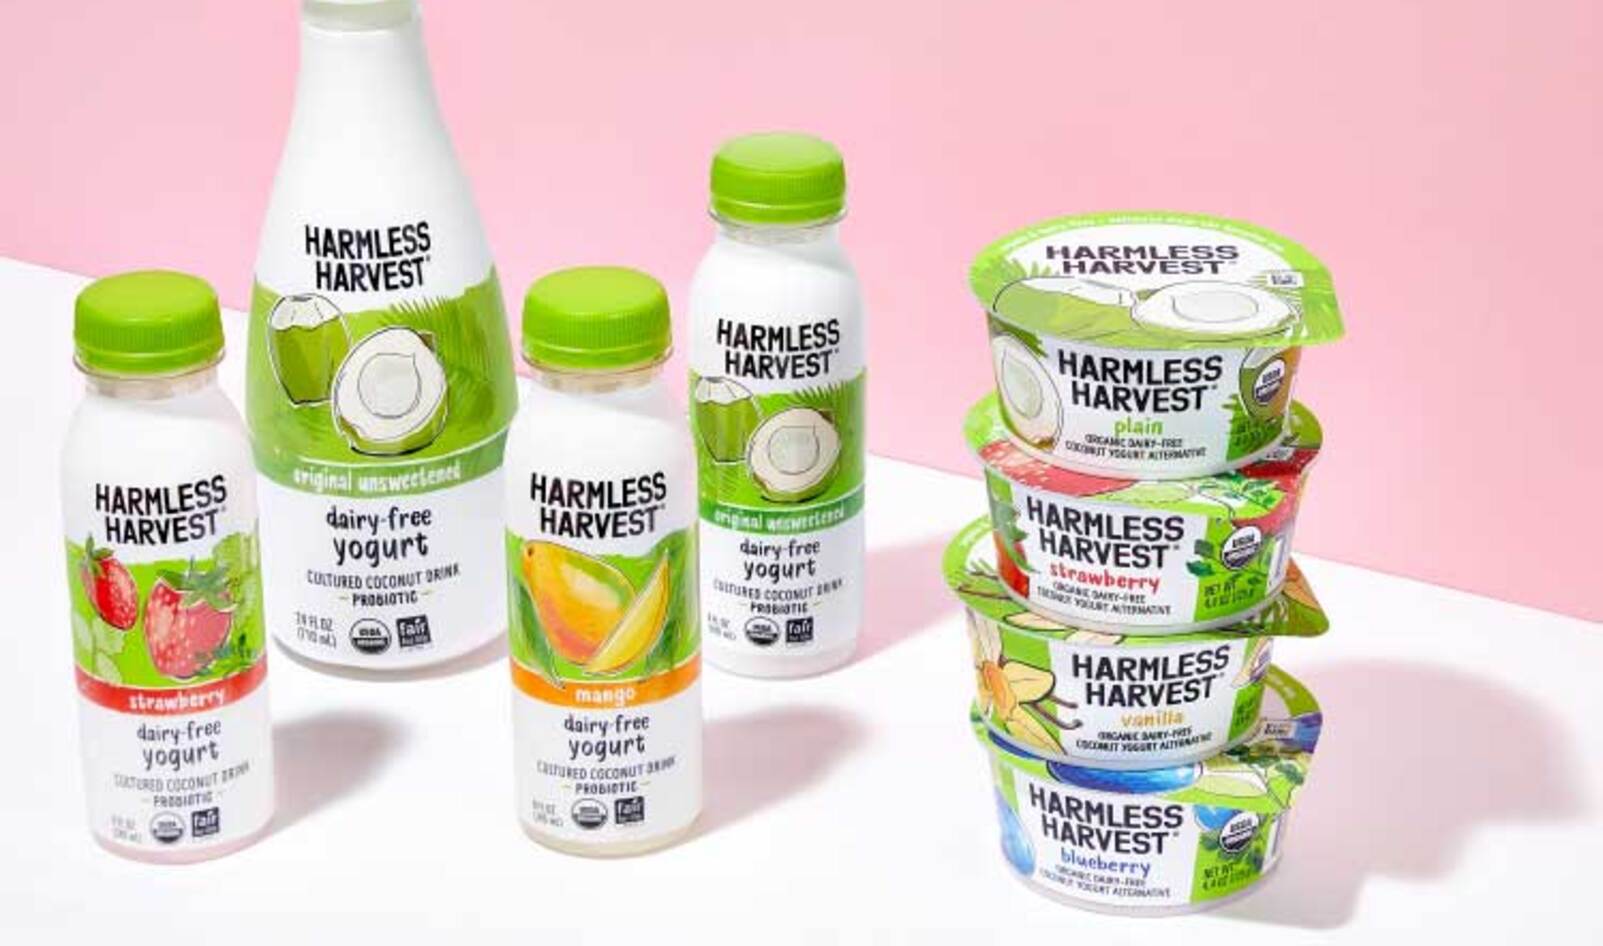 Coconut Water Brand Harmless Harvest Launches Vegan Yogurt